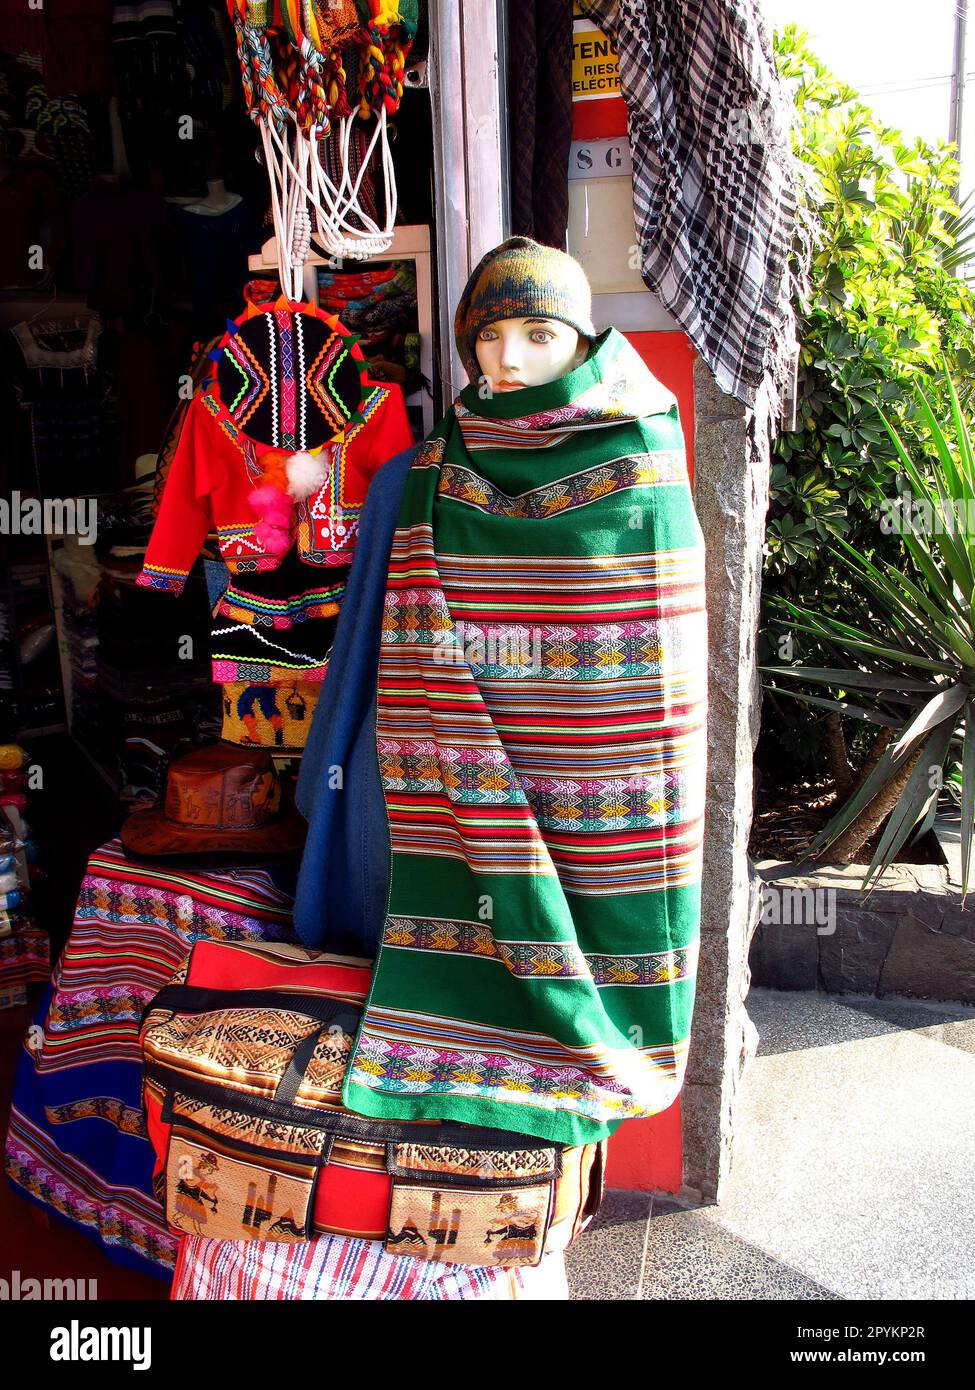 Inka Market, The local market in Miraflores, Lima Stock Photo